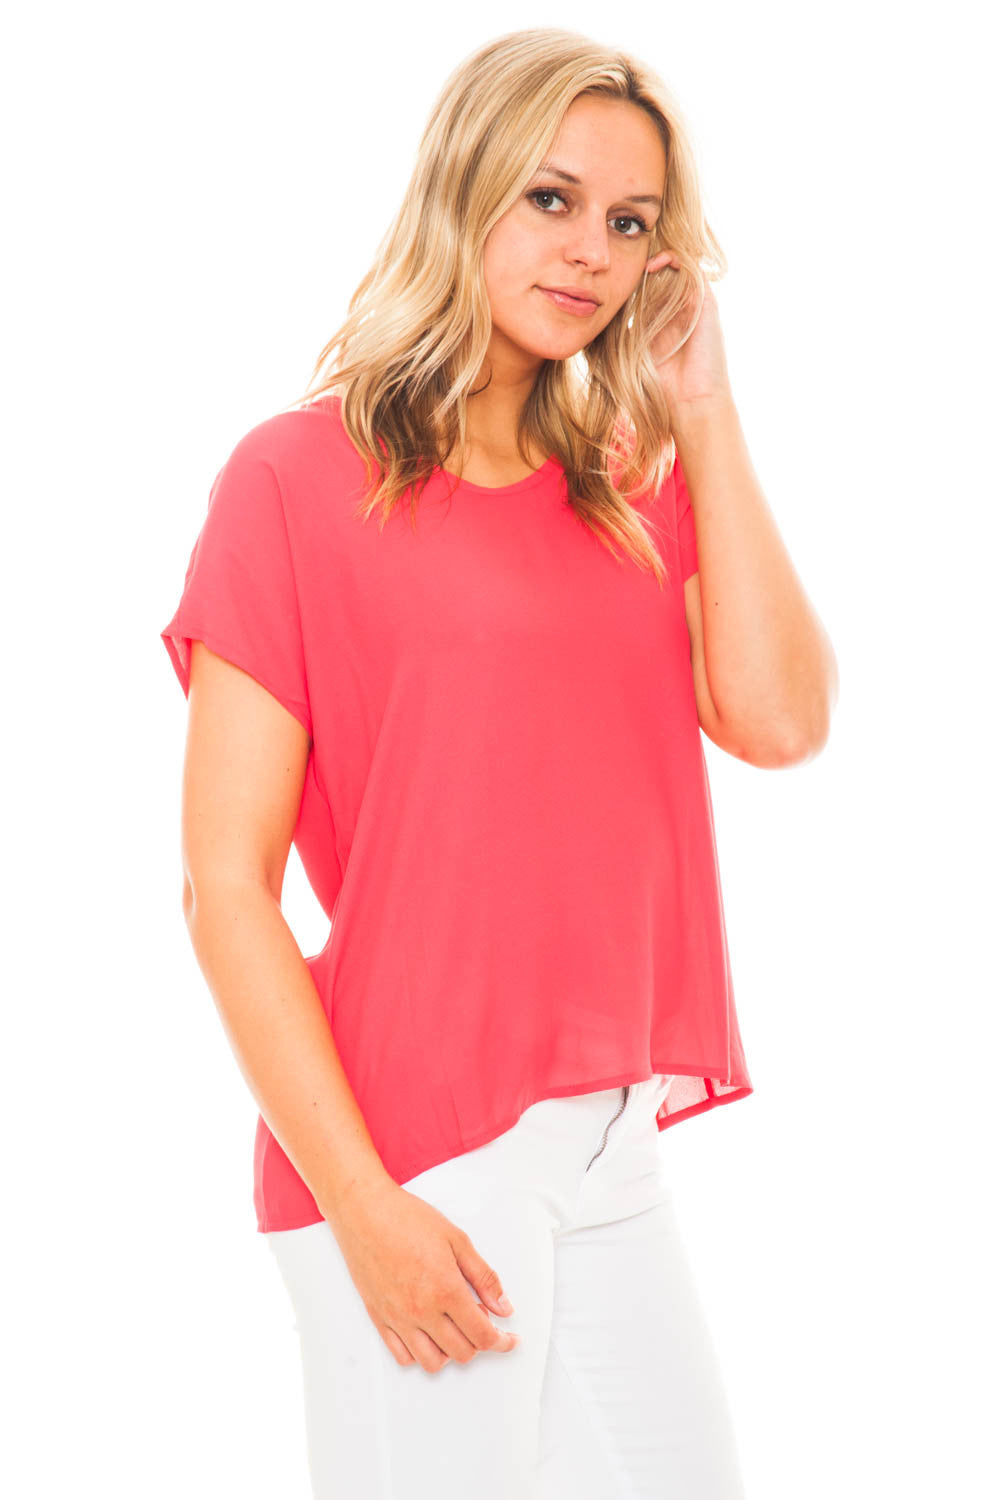 Shirt - The Perfect Pink Chiffon Top by Lush